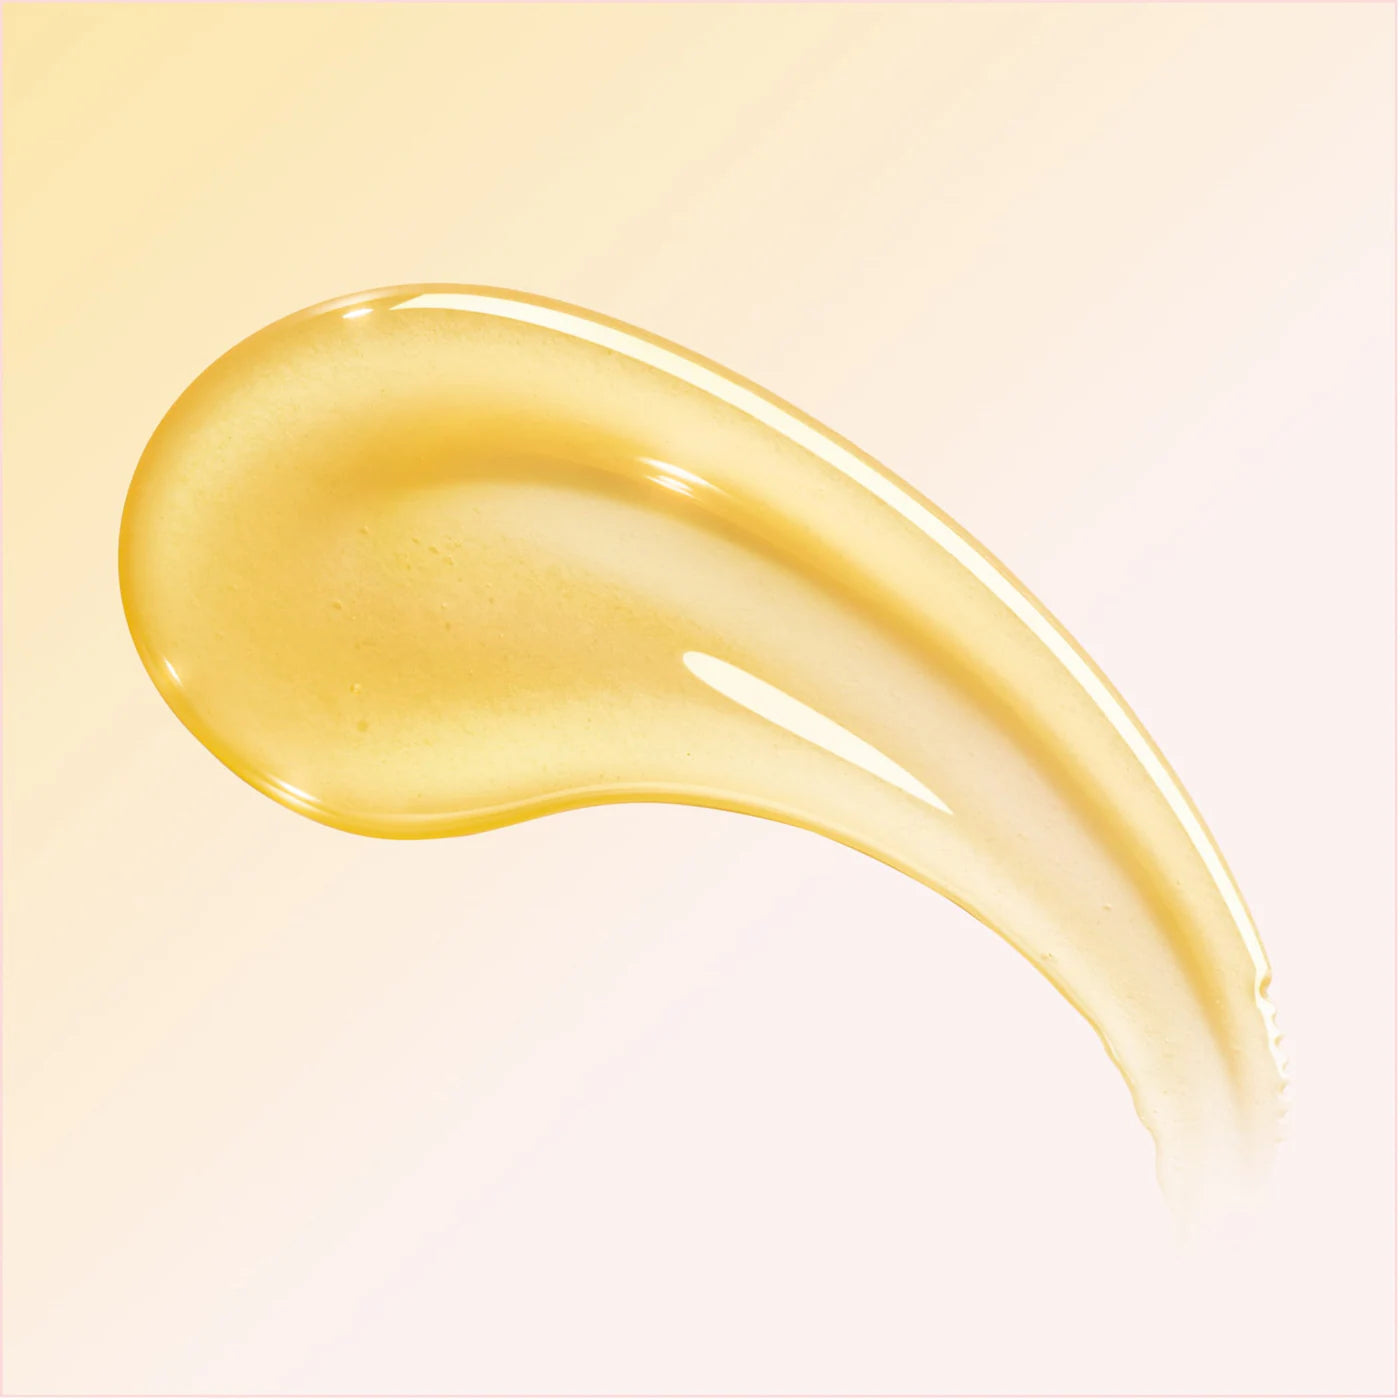 Gisou | Honey Infused Hydrating Lip Oil | Honey Gold